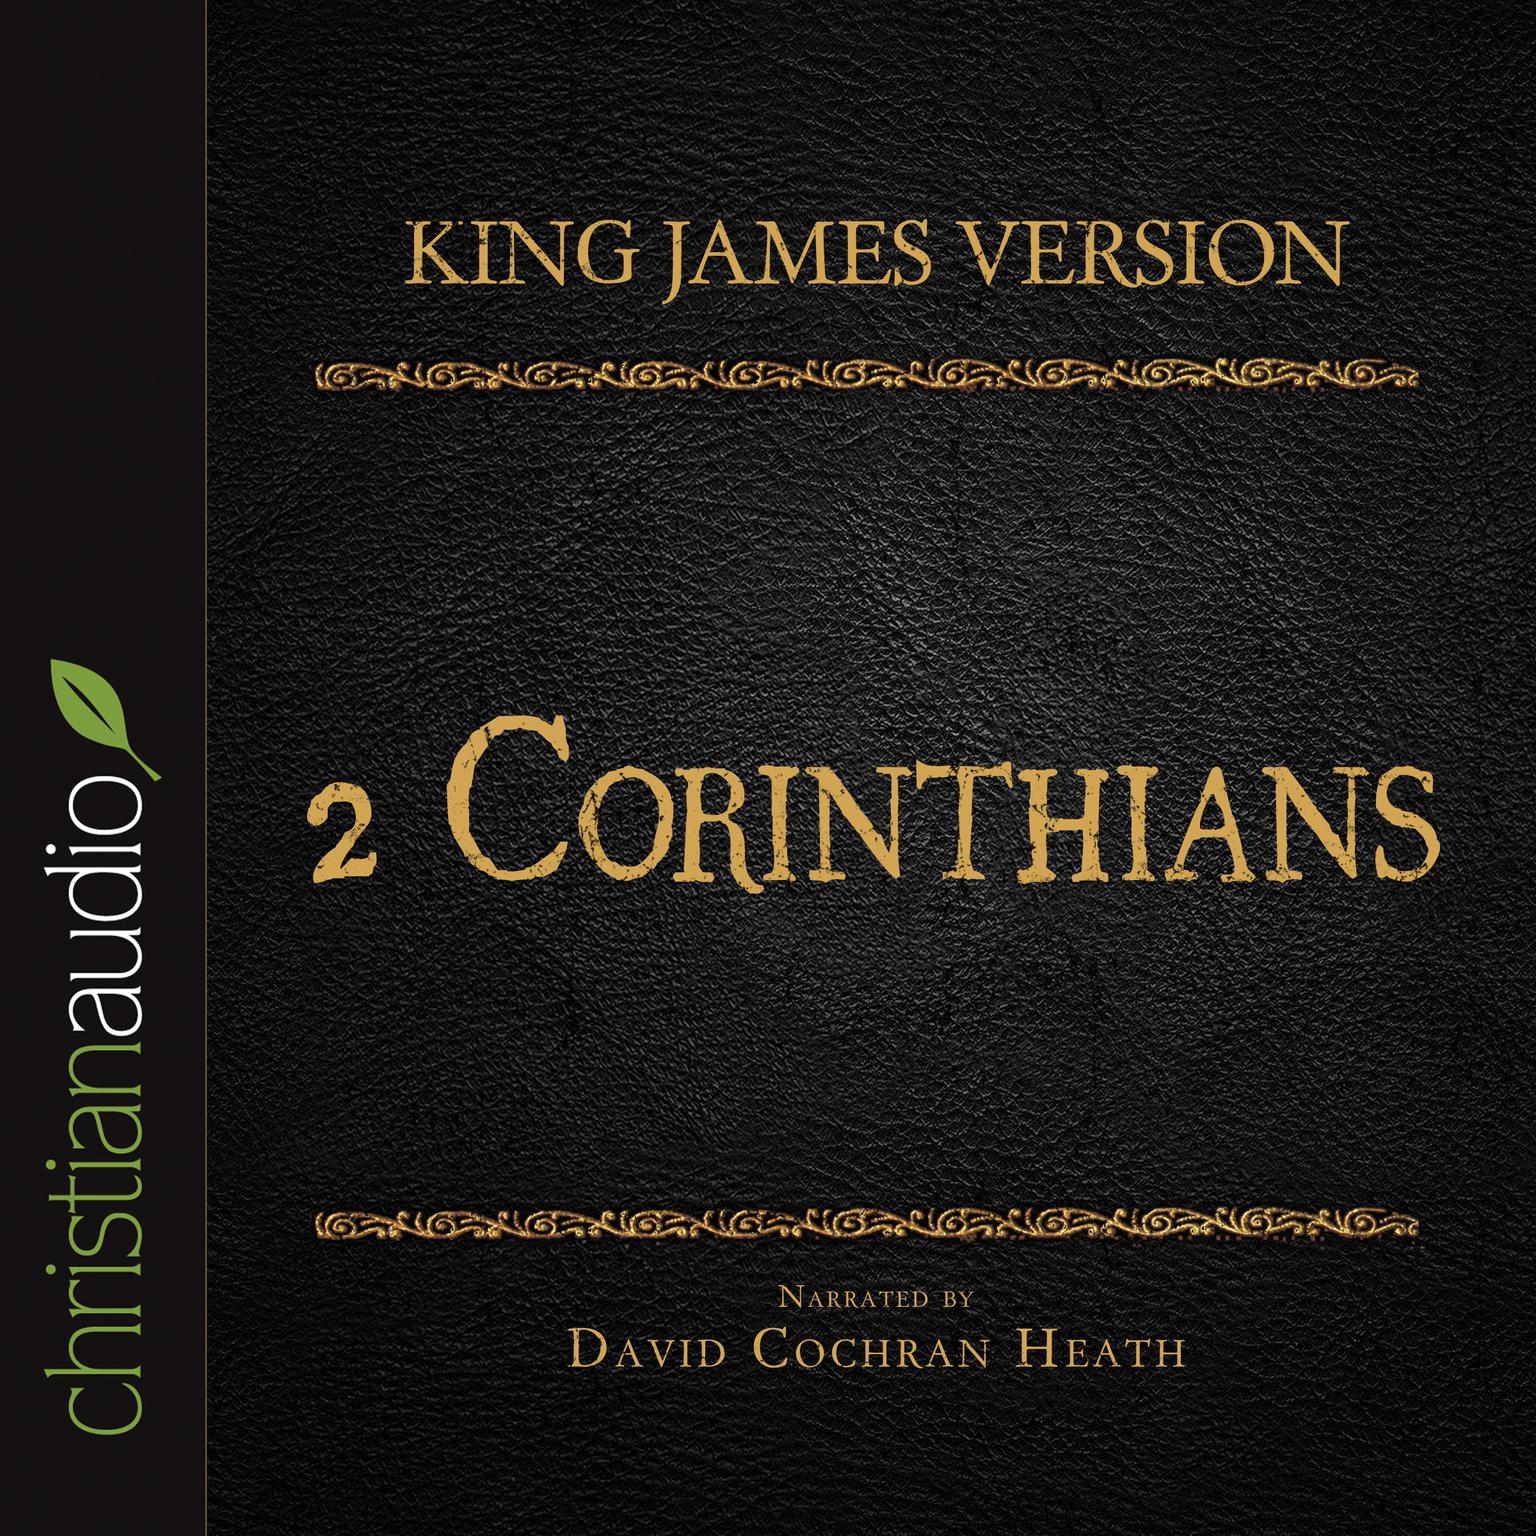 Holy Bible in Audio - King James Version: 2 Corinthians Audiobook, by David Cochran Heath